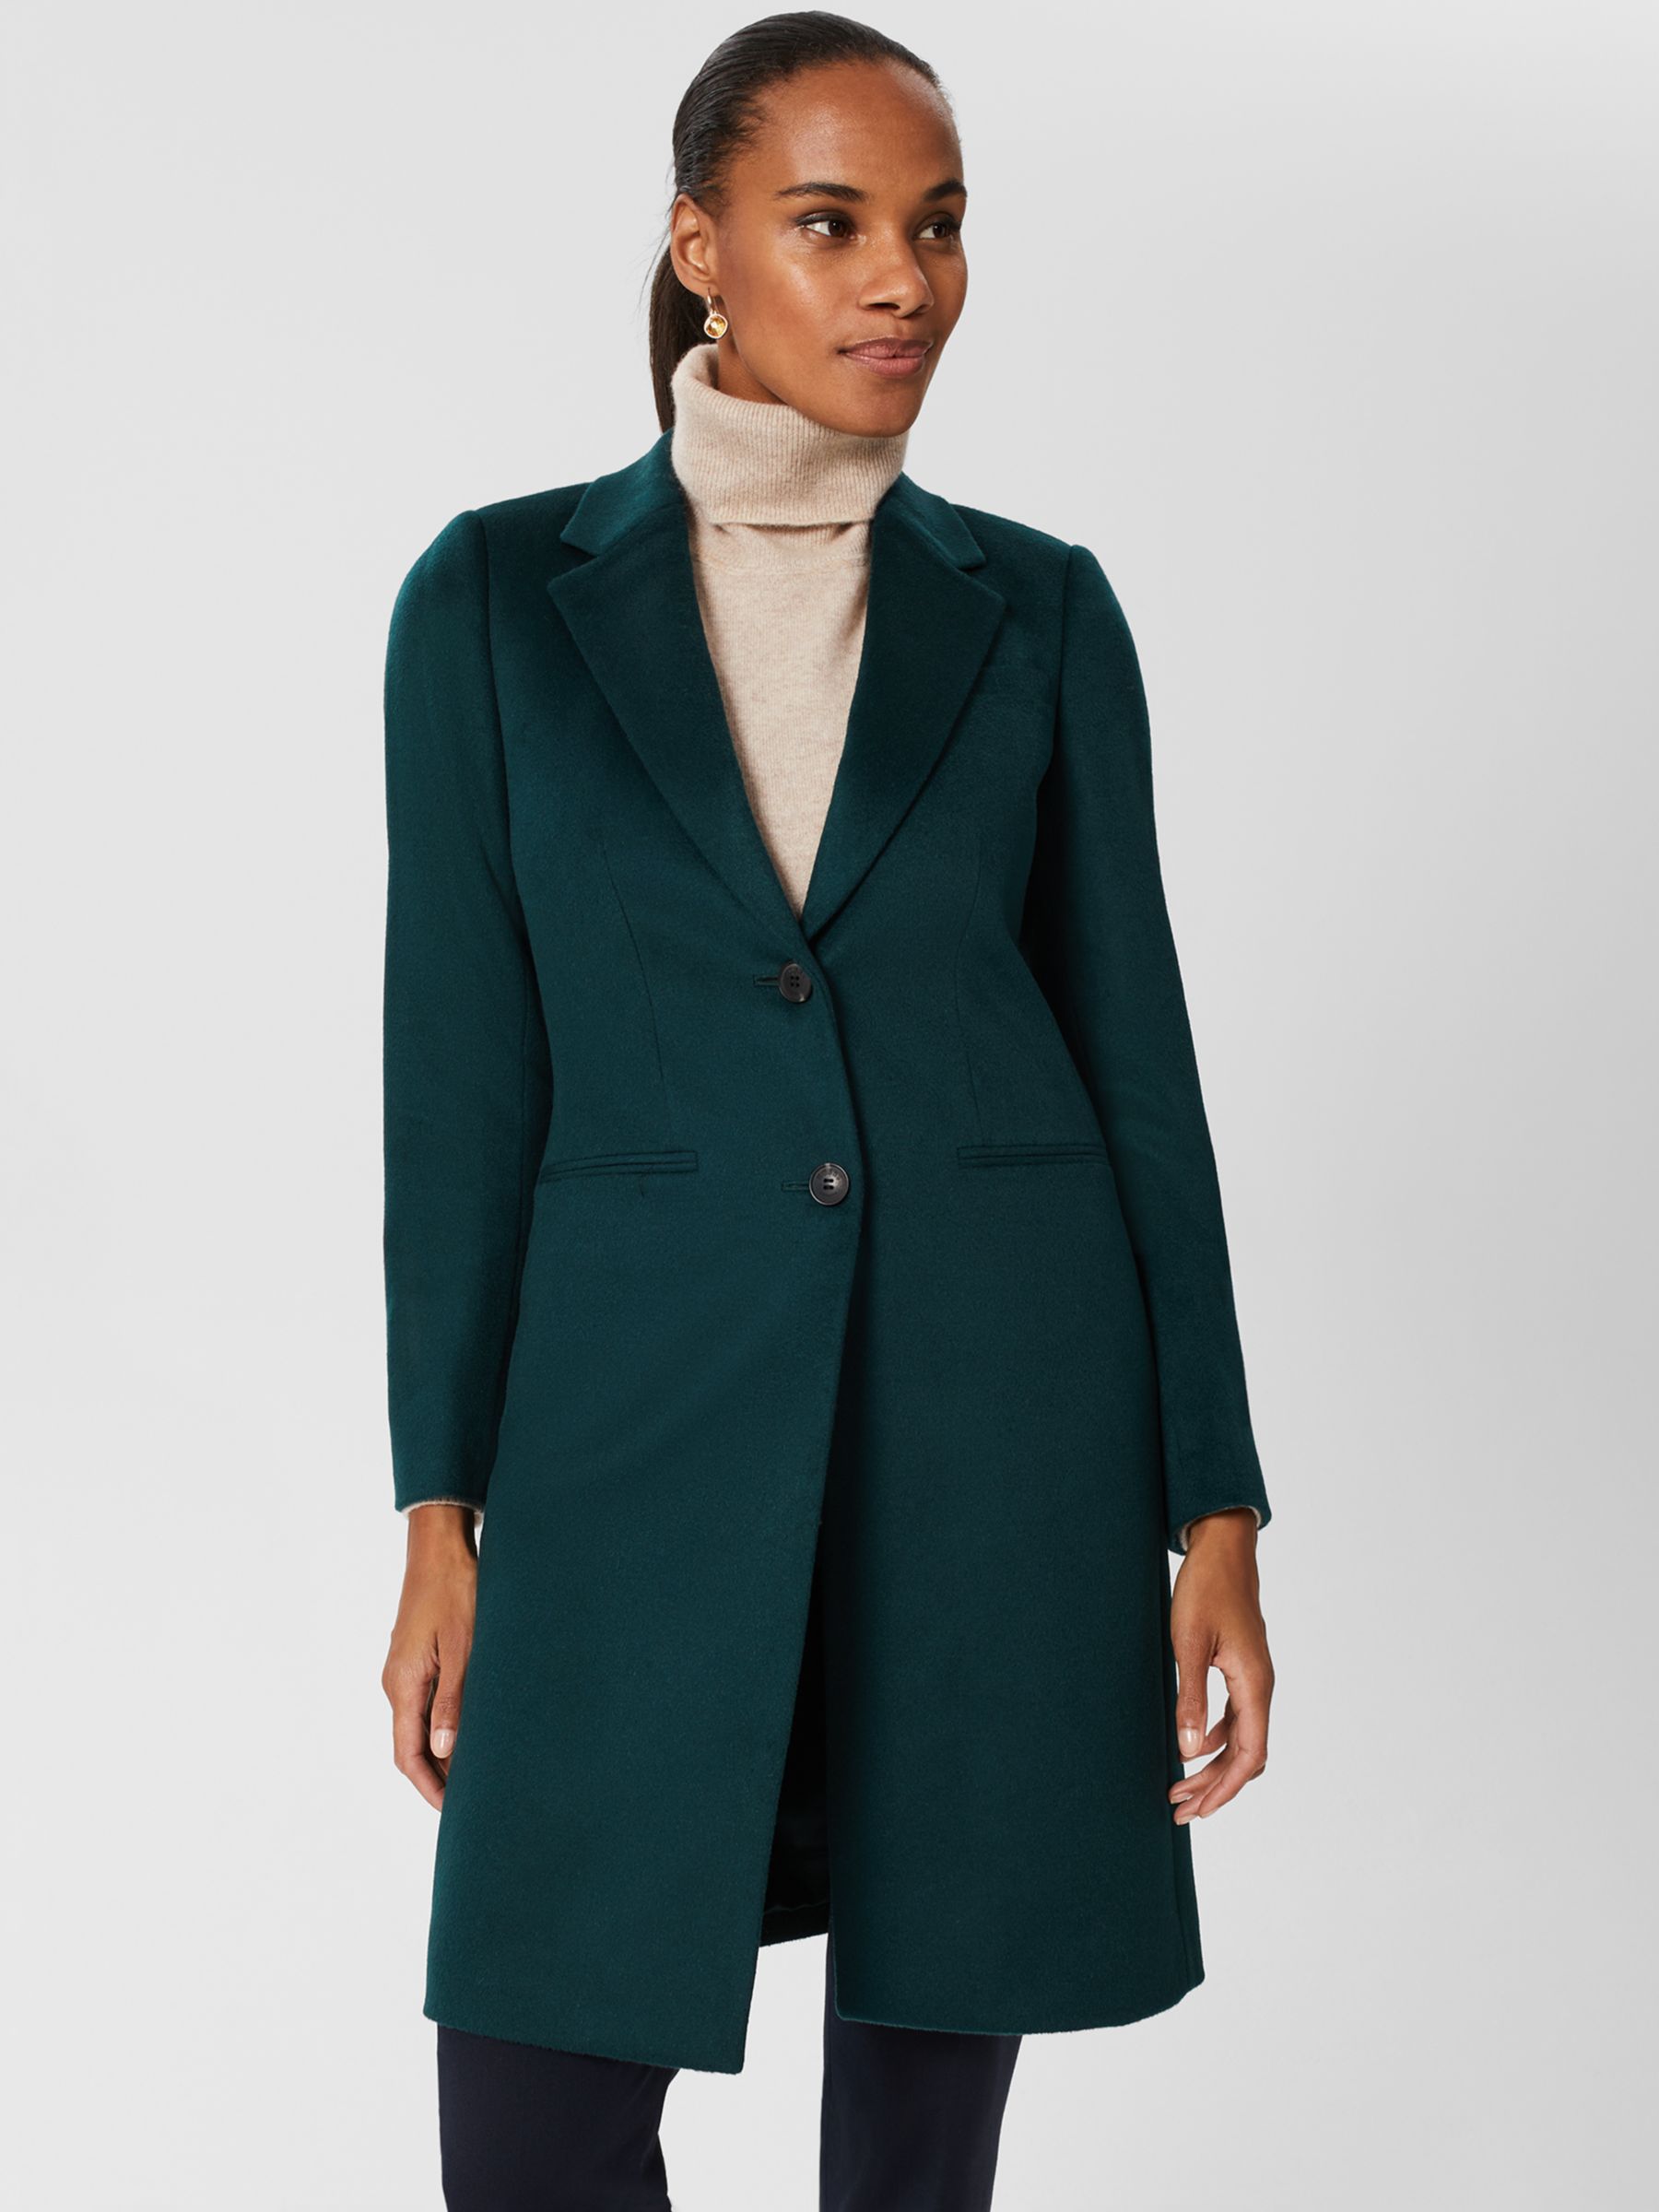 Hobbs Tilda Wool Tailored Coat, Dark Green at John Lewis & Partners